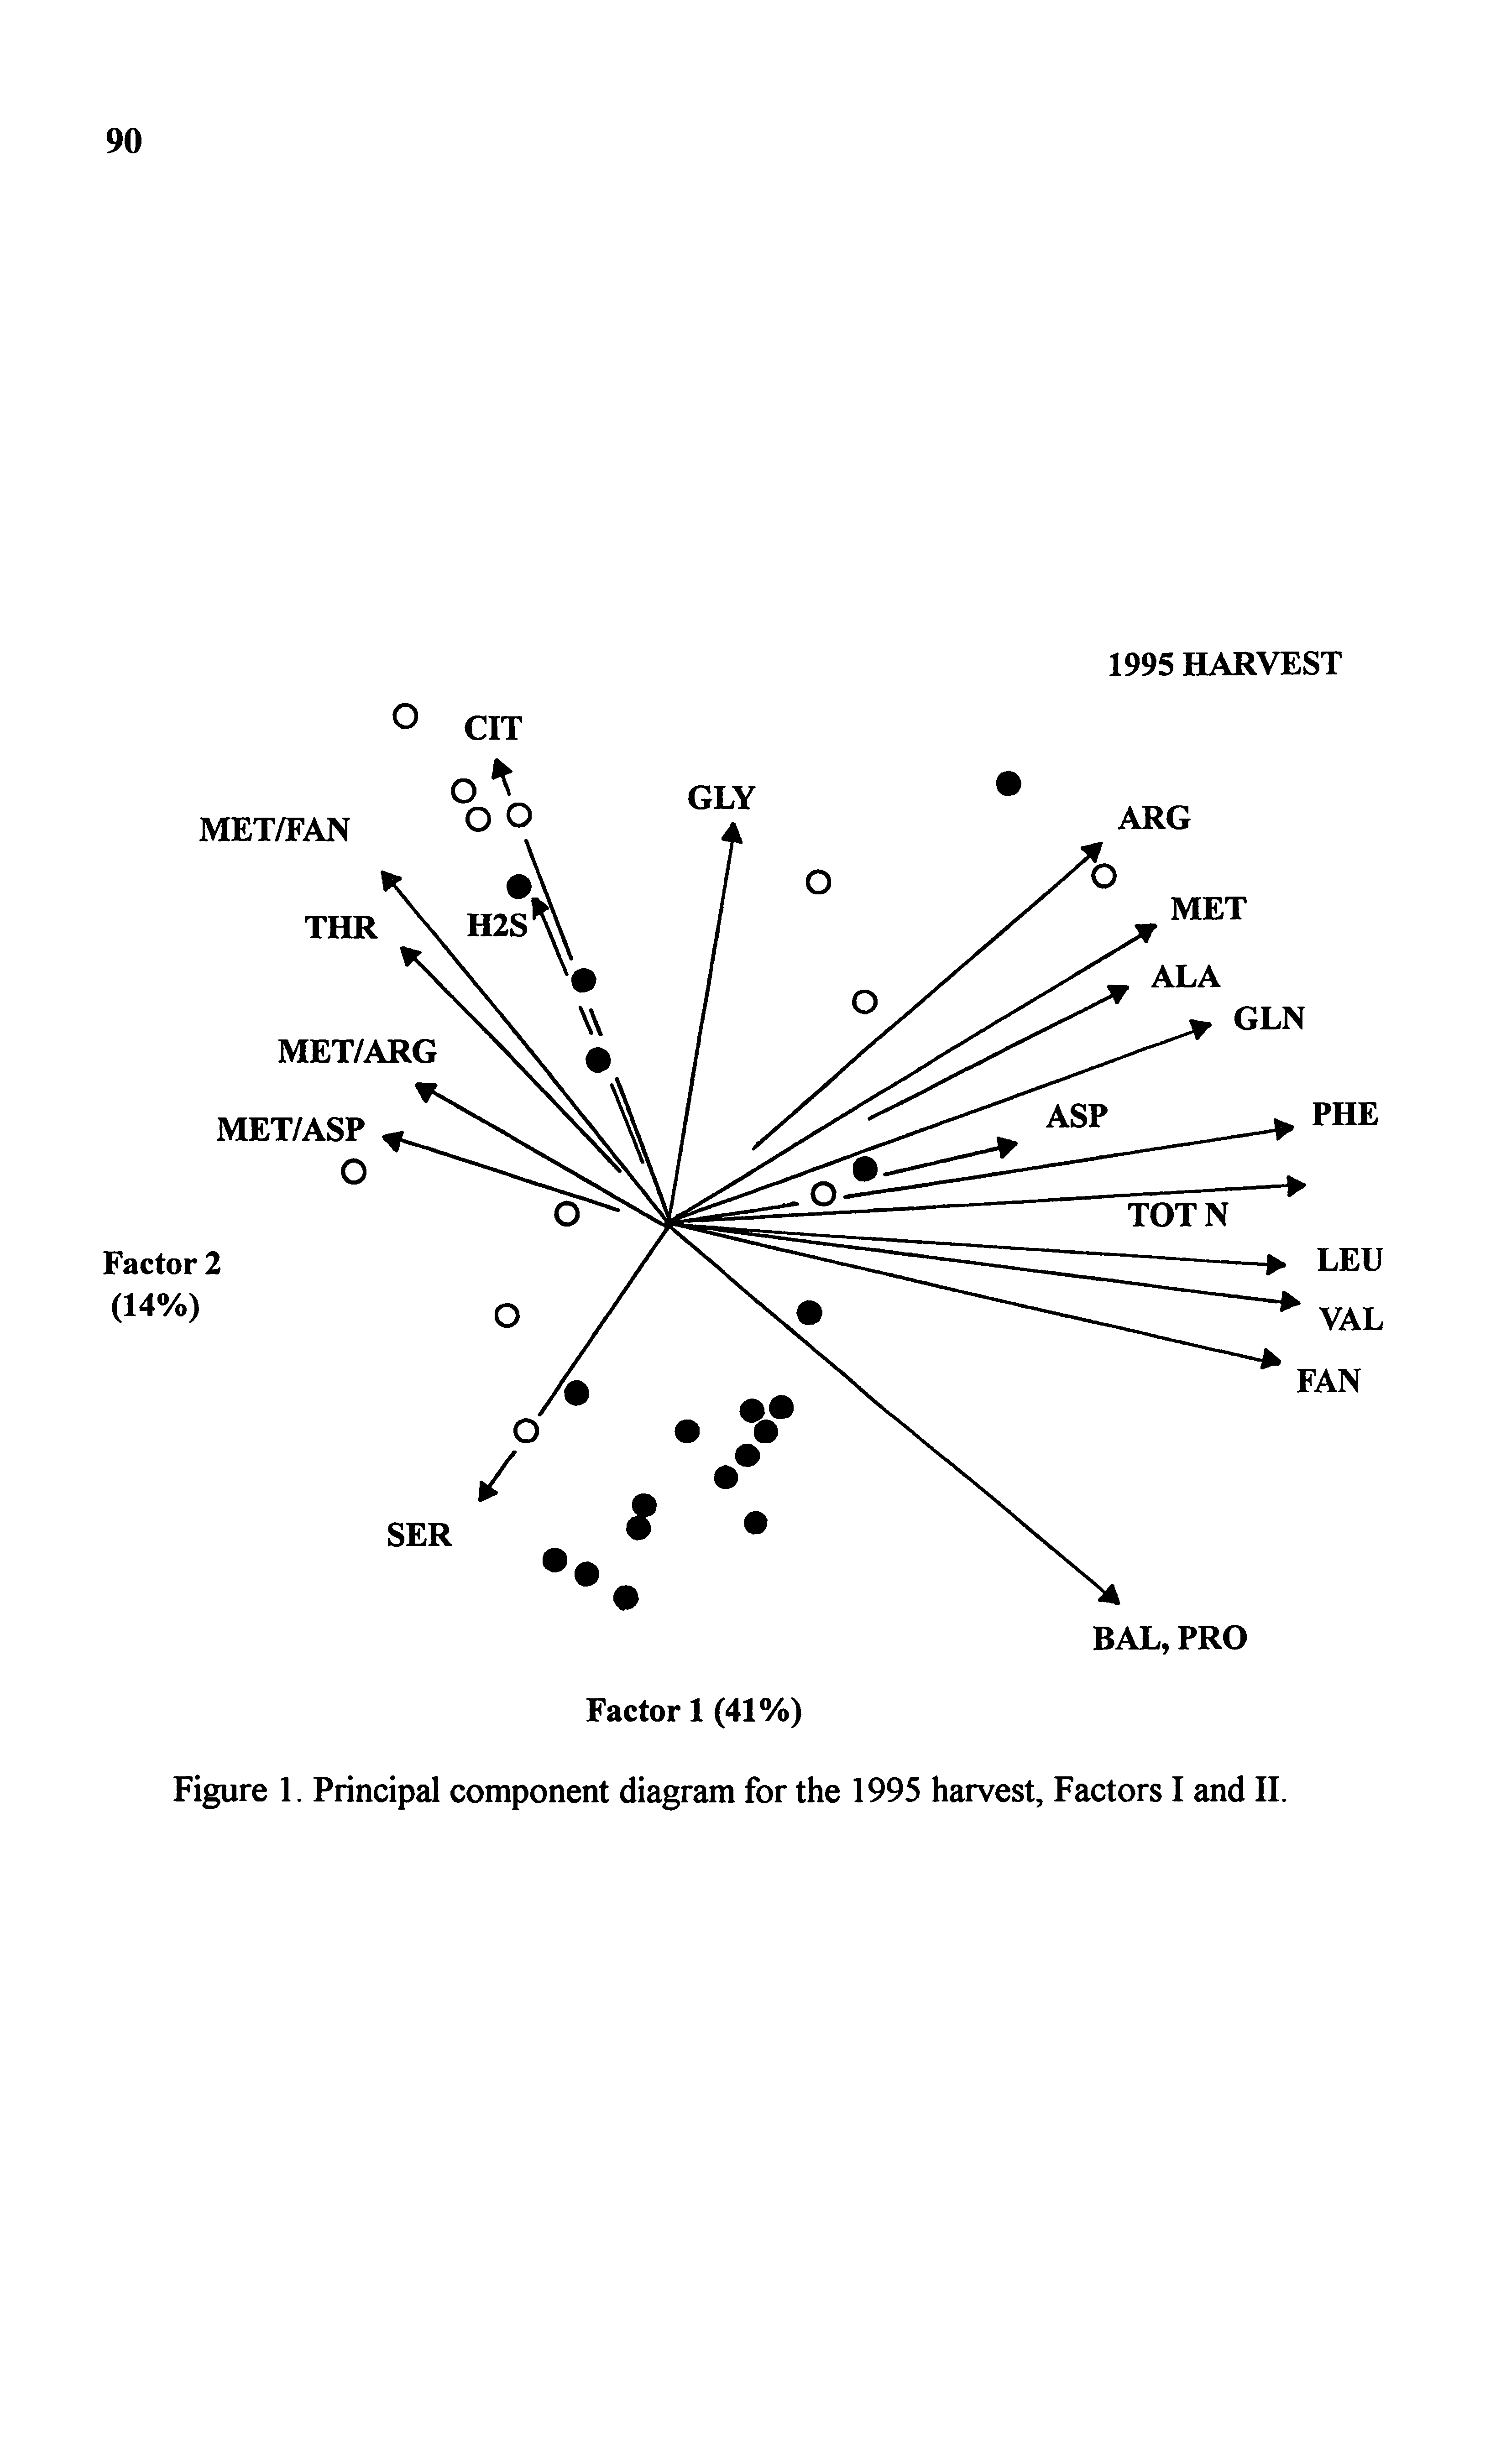 Figure 1. Principal component diagram for the 1995 harvest. Factors I and II.